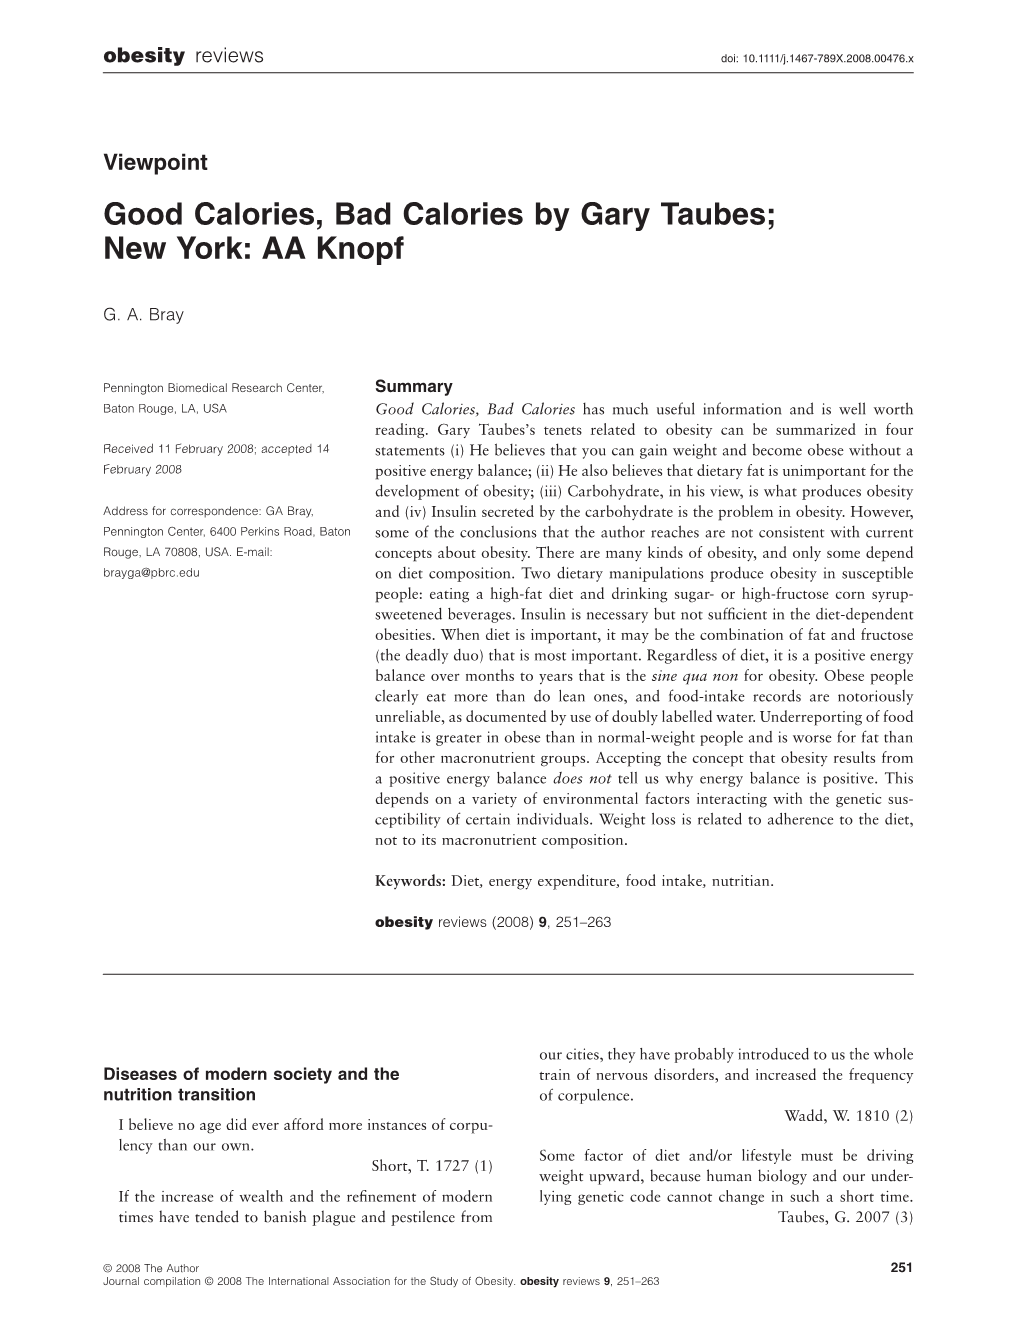 Good Calories, Bad Calories by Gary Taubes; New York: AA Knopf